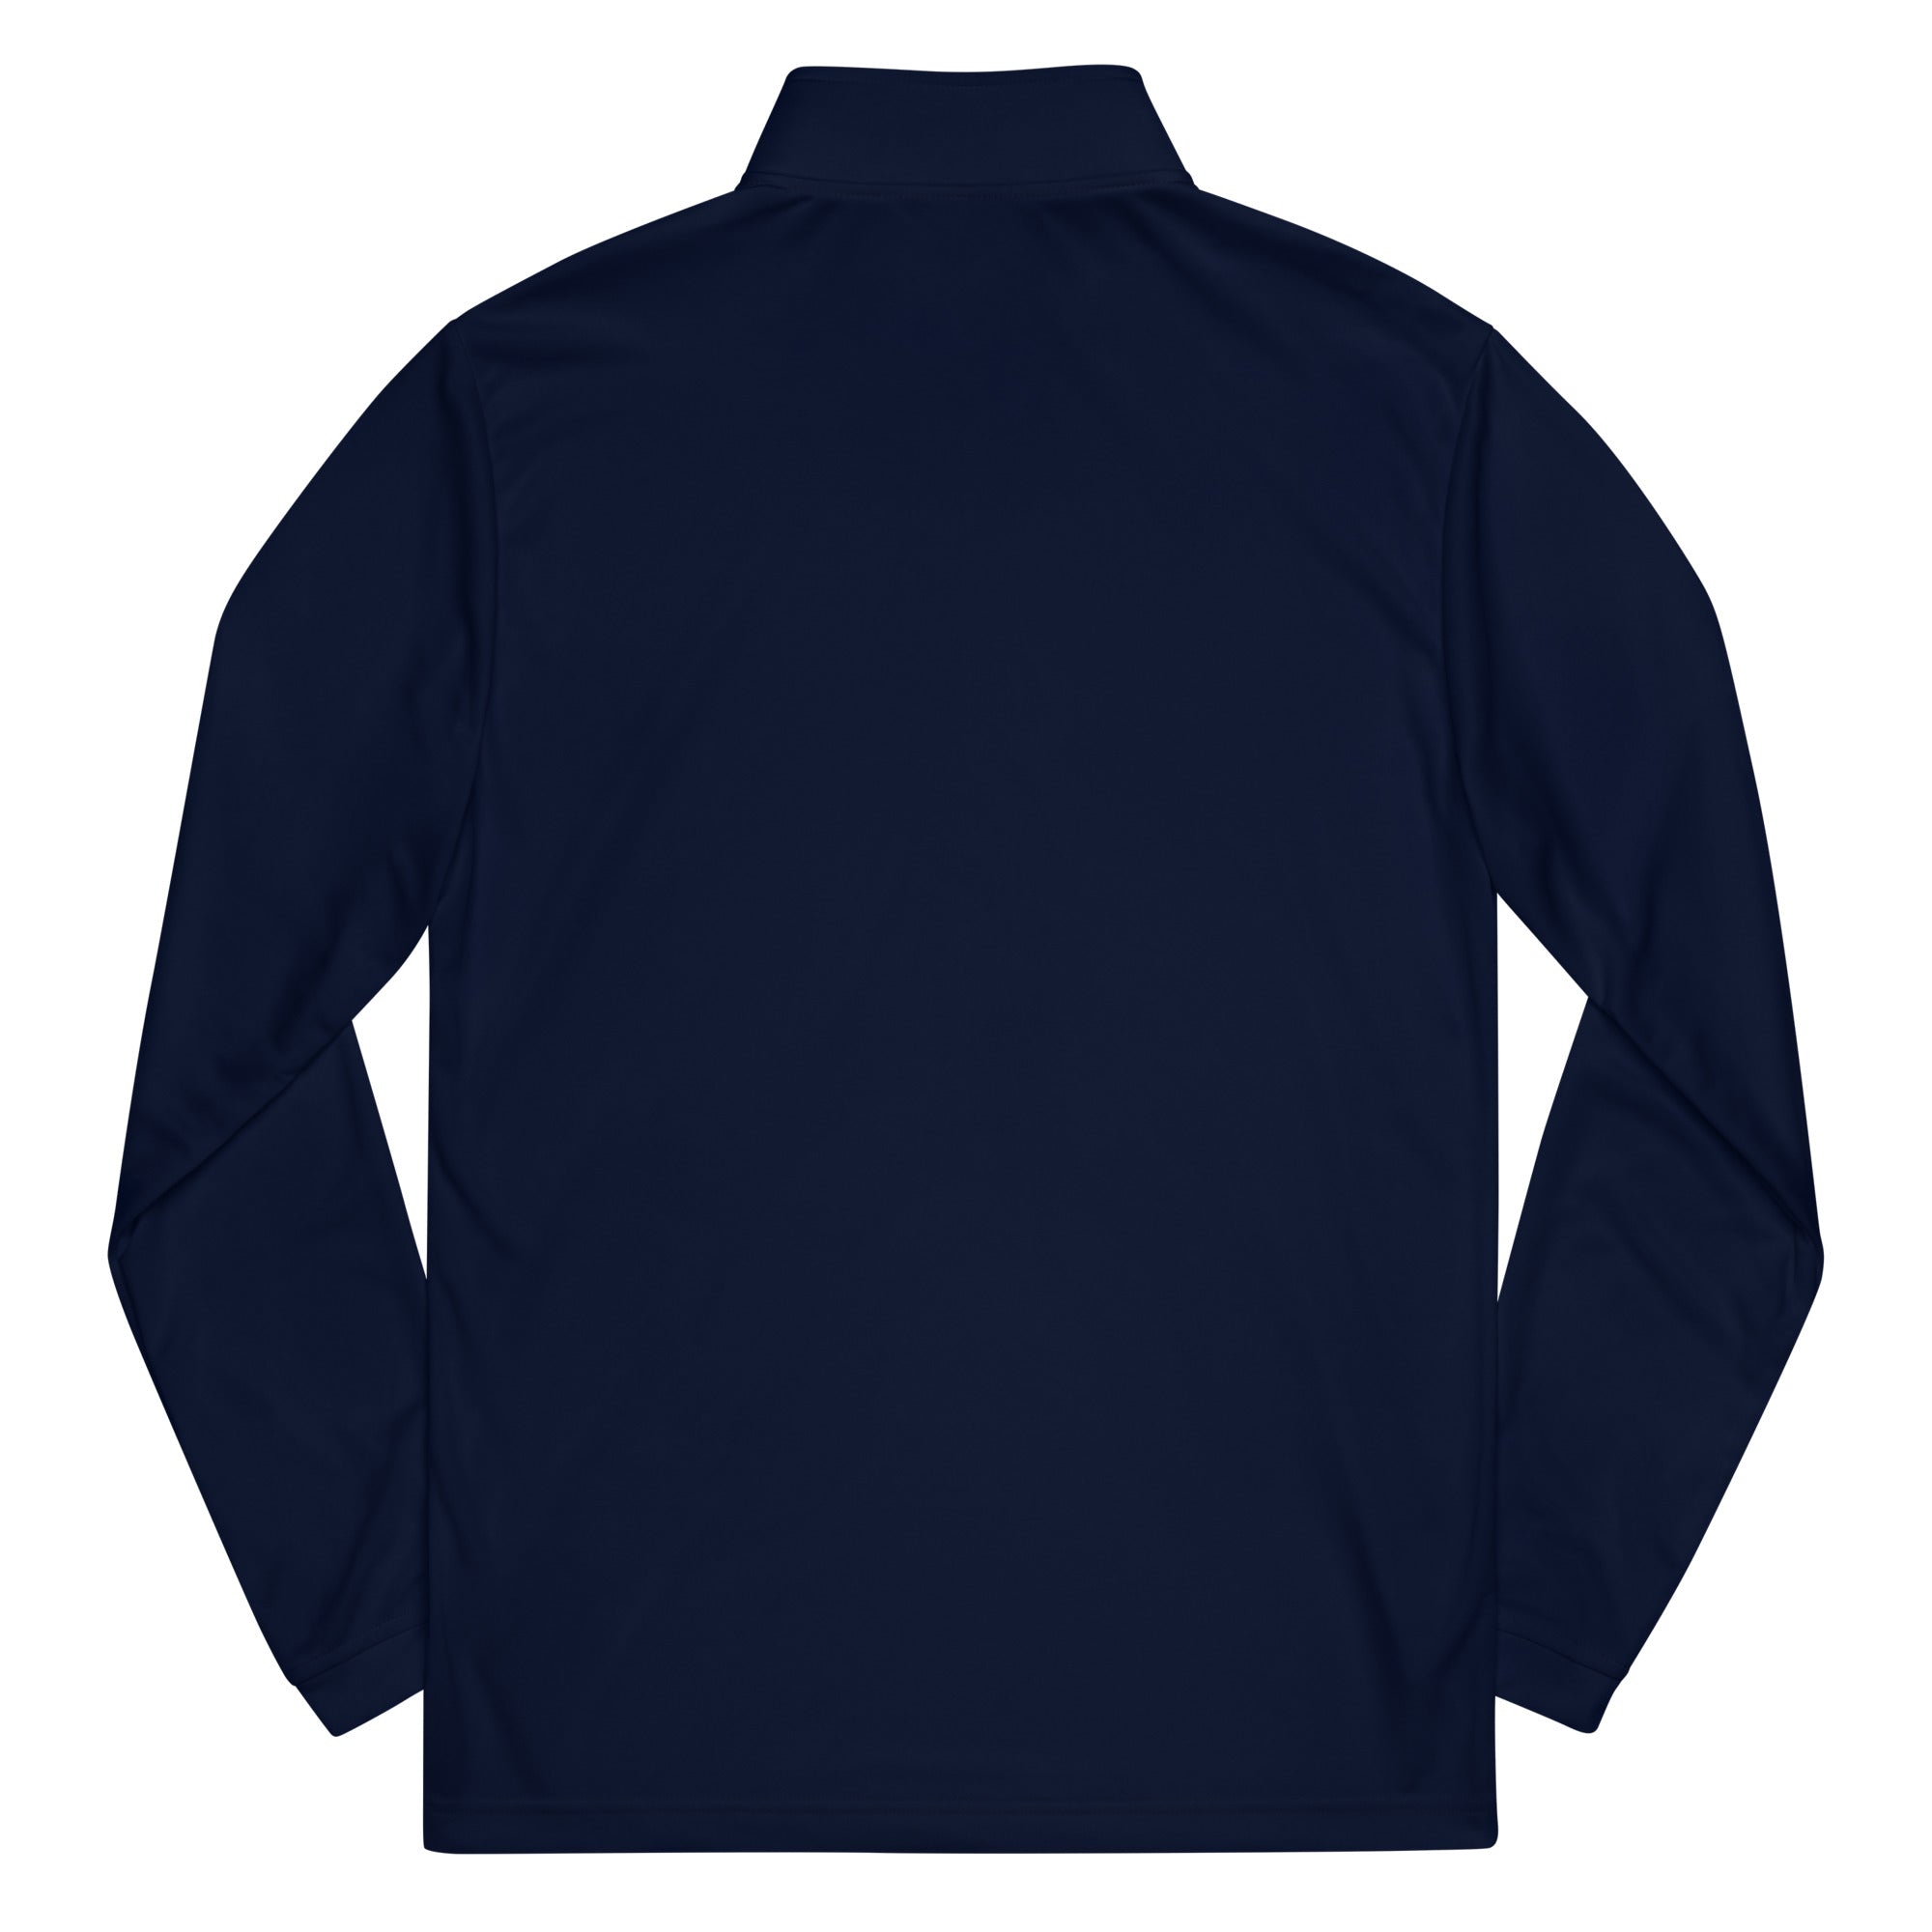 CycleScene/Adidas Quarter zip pullover